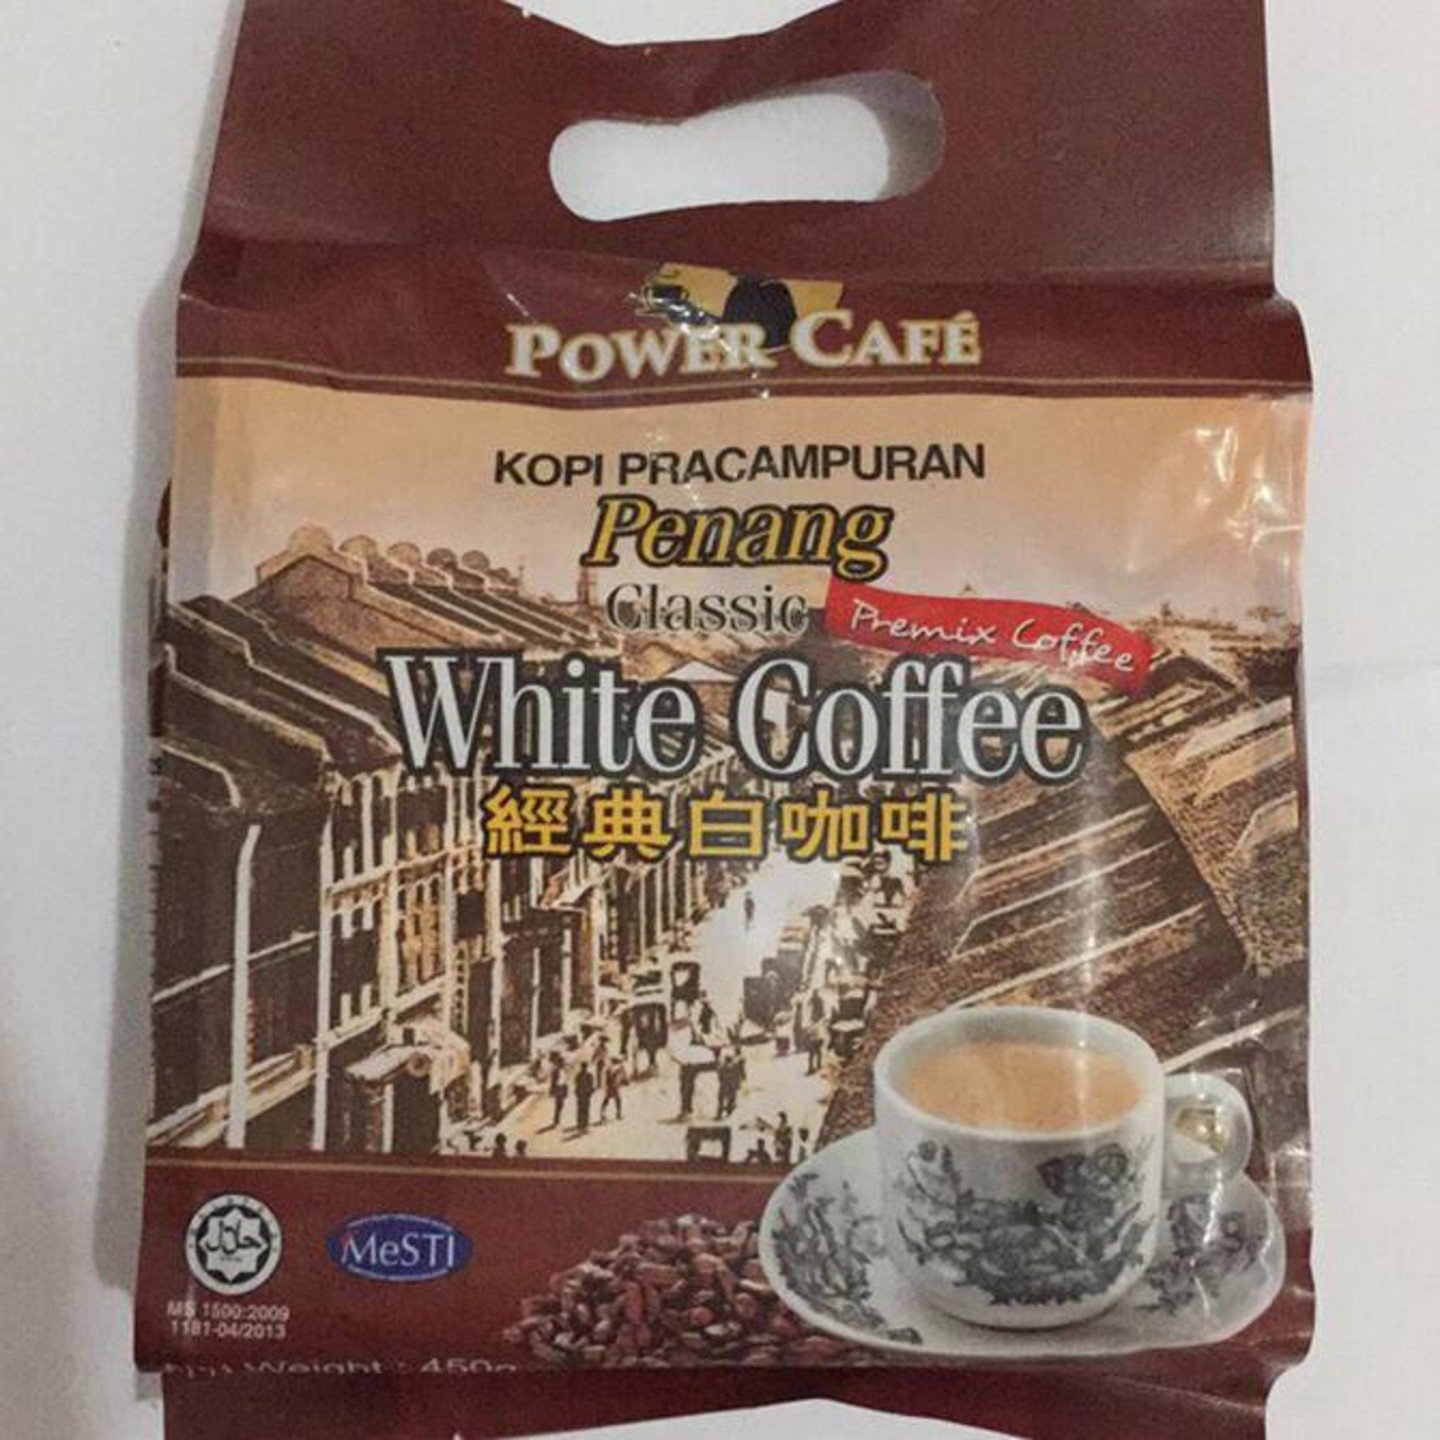 Power Cafe White coffee